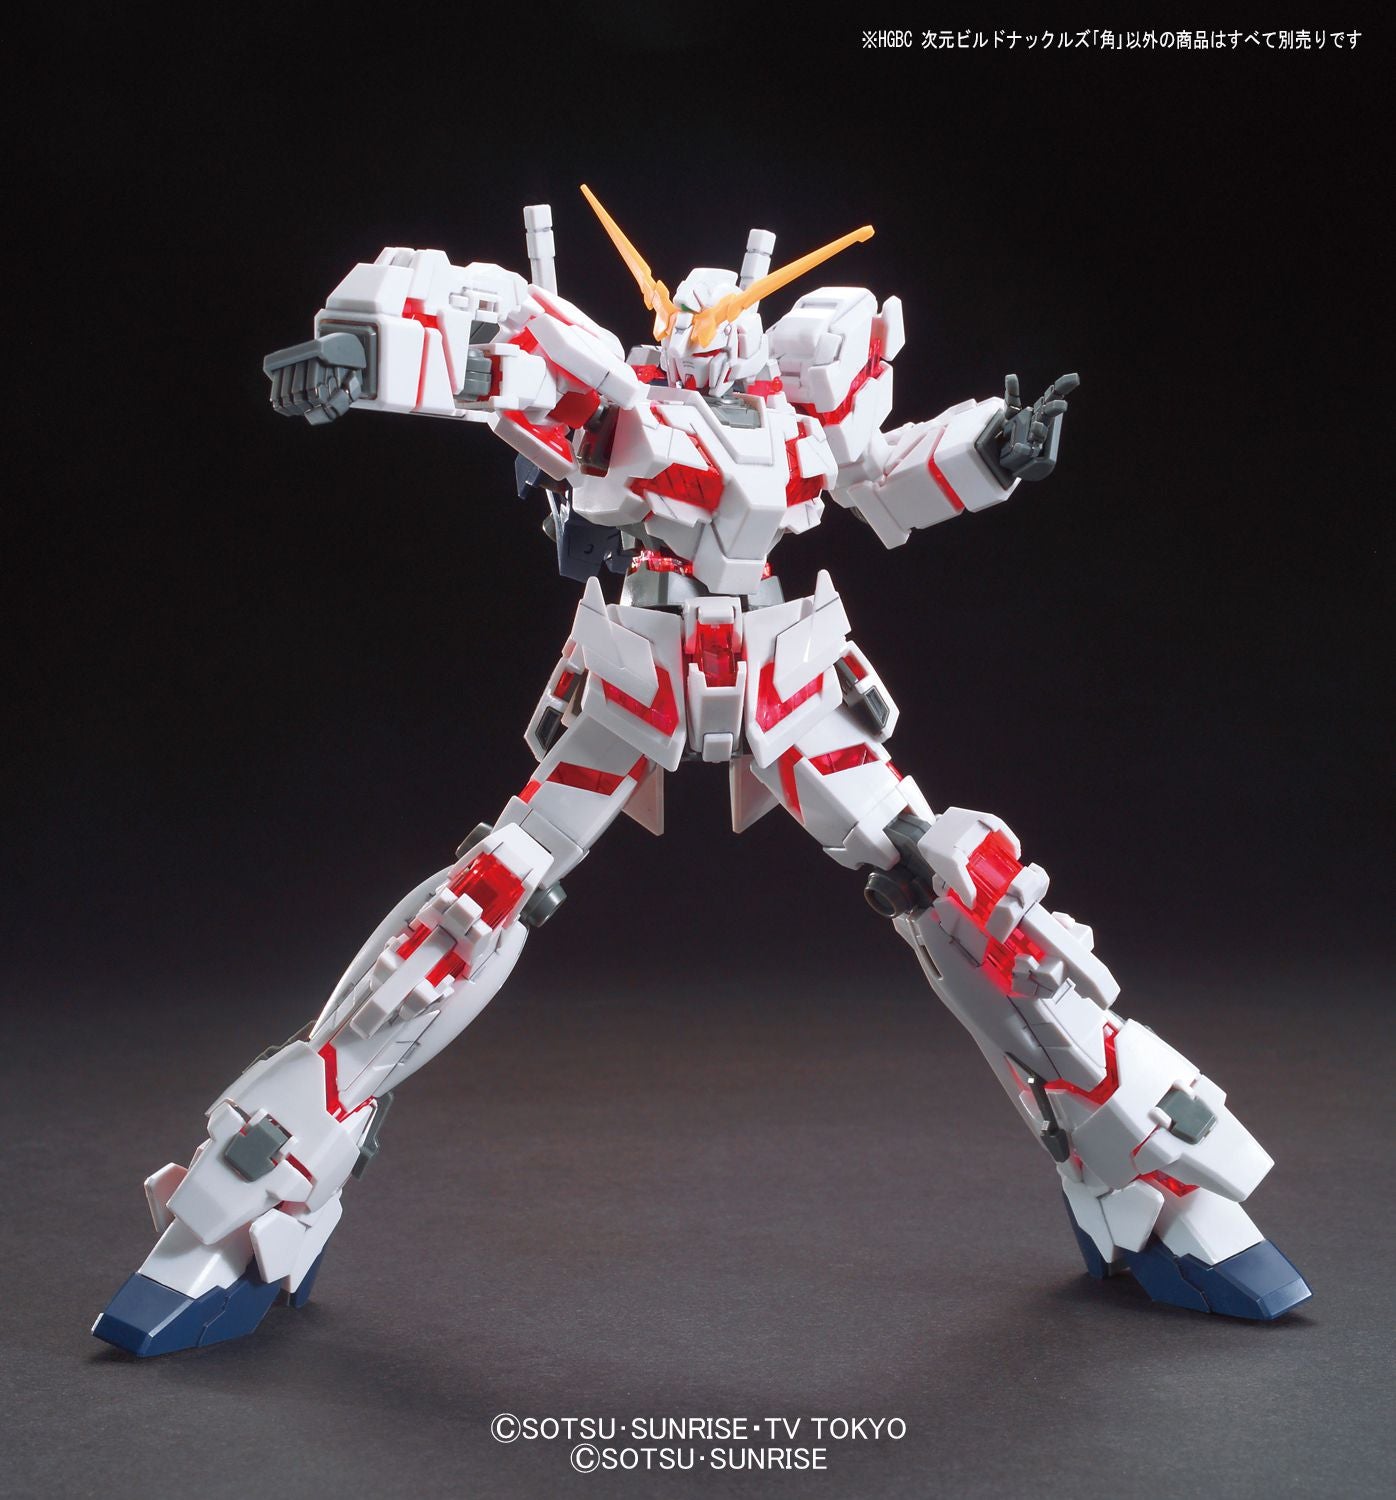 HGBC 1/144 Jigen Build Knuckles 'Kaku' - Gundam Build Fighters